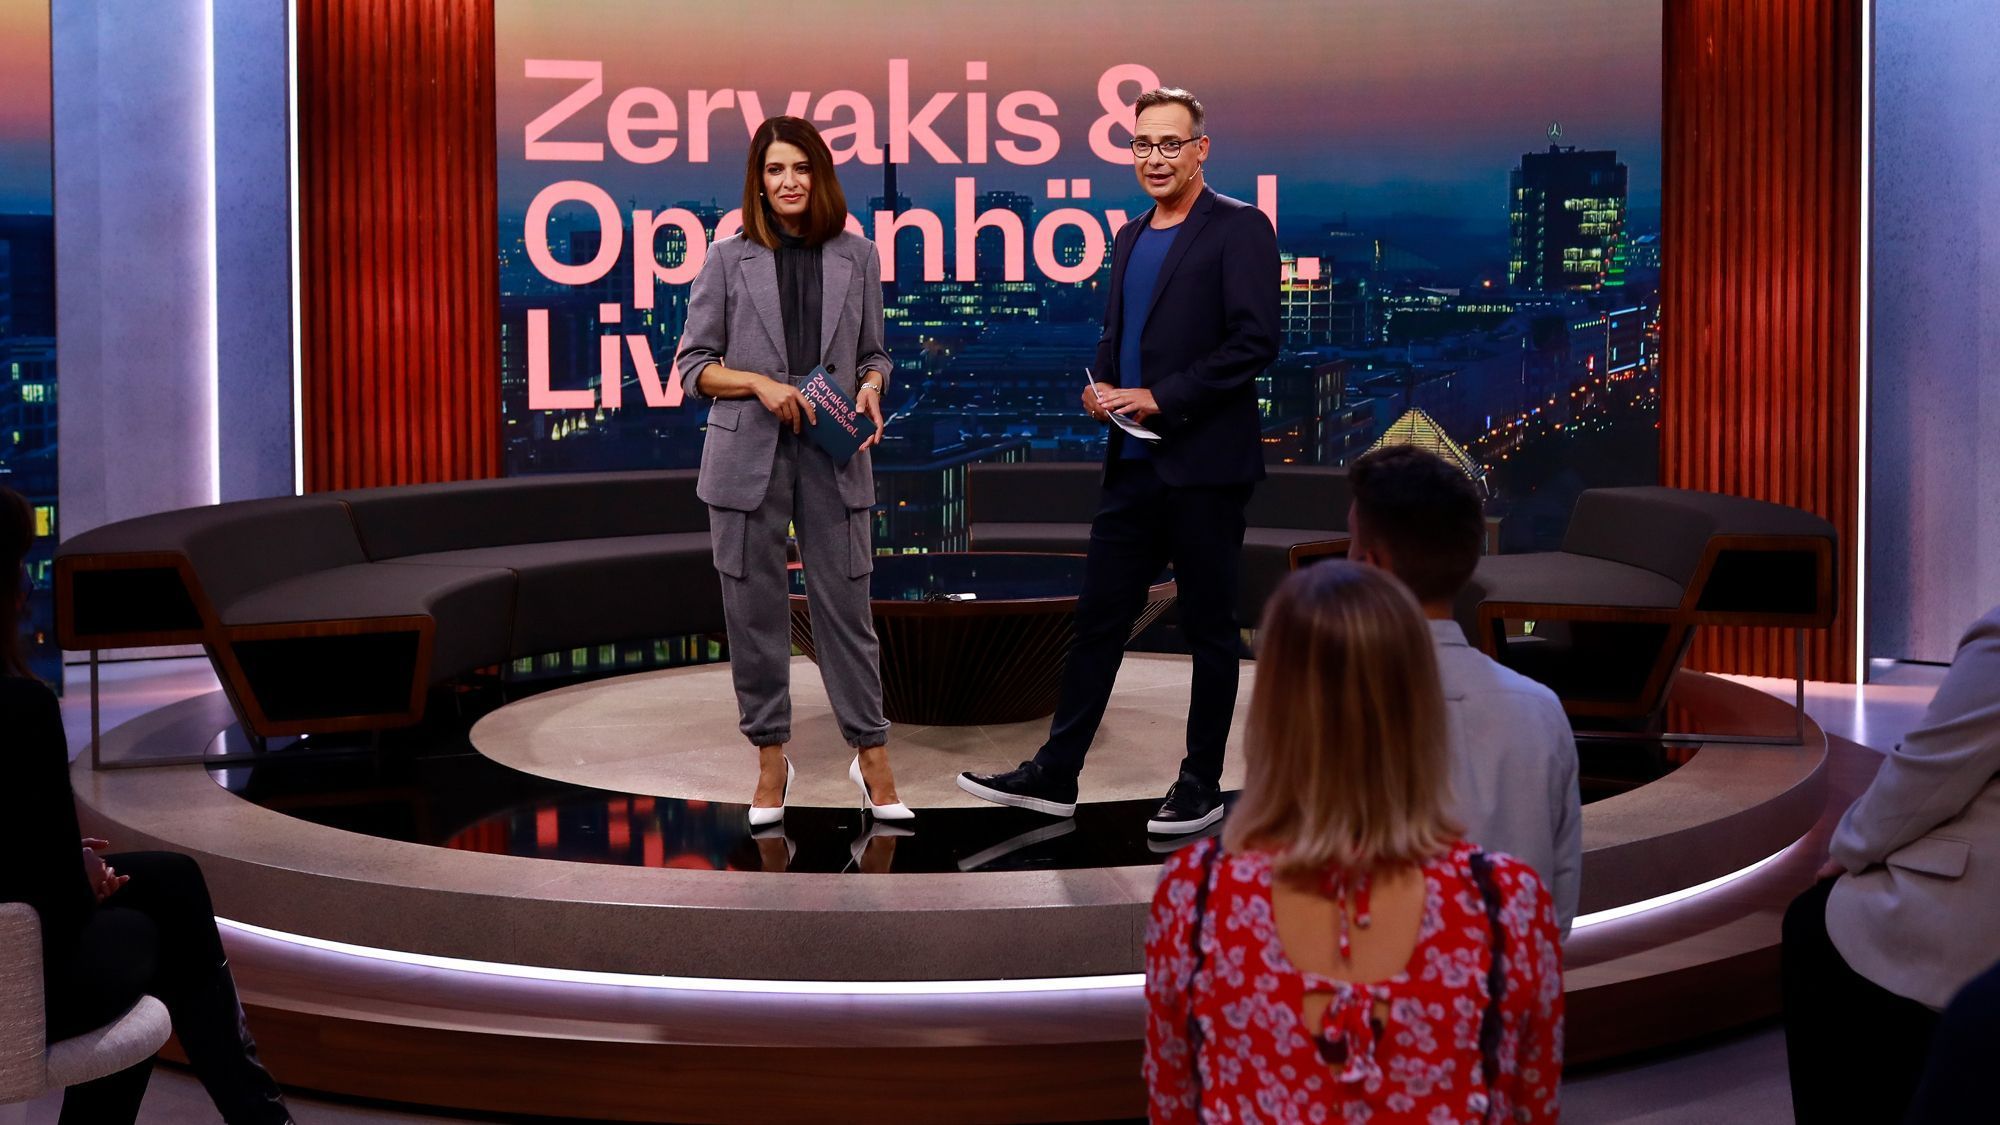 #ZOL_Zervakis & Opdenhövel. Live."